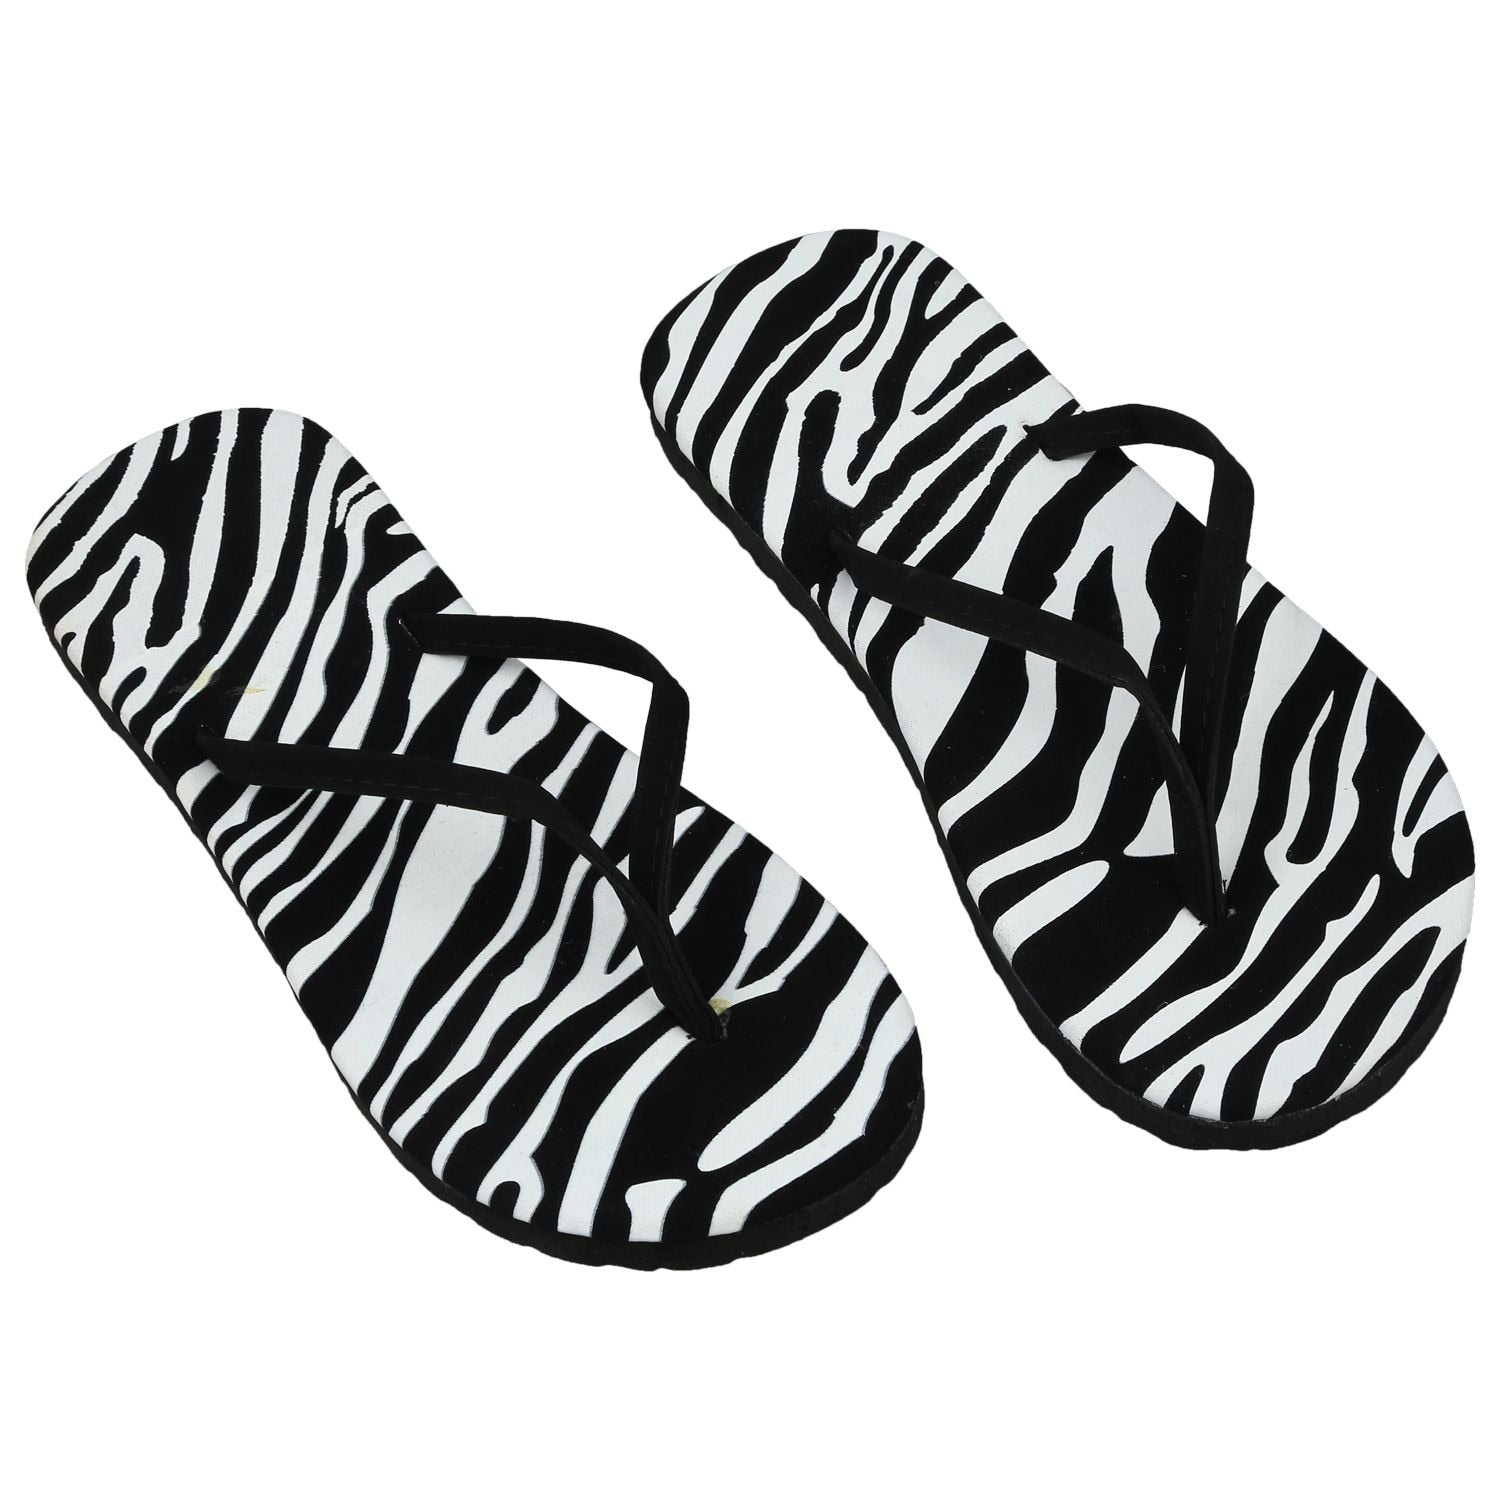 New New Women Fashion Casual Beach Flip Flops Flat Sandals - ebowsos